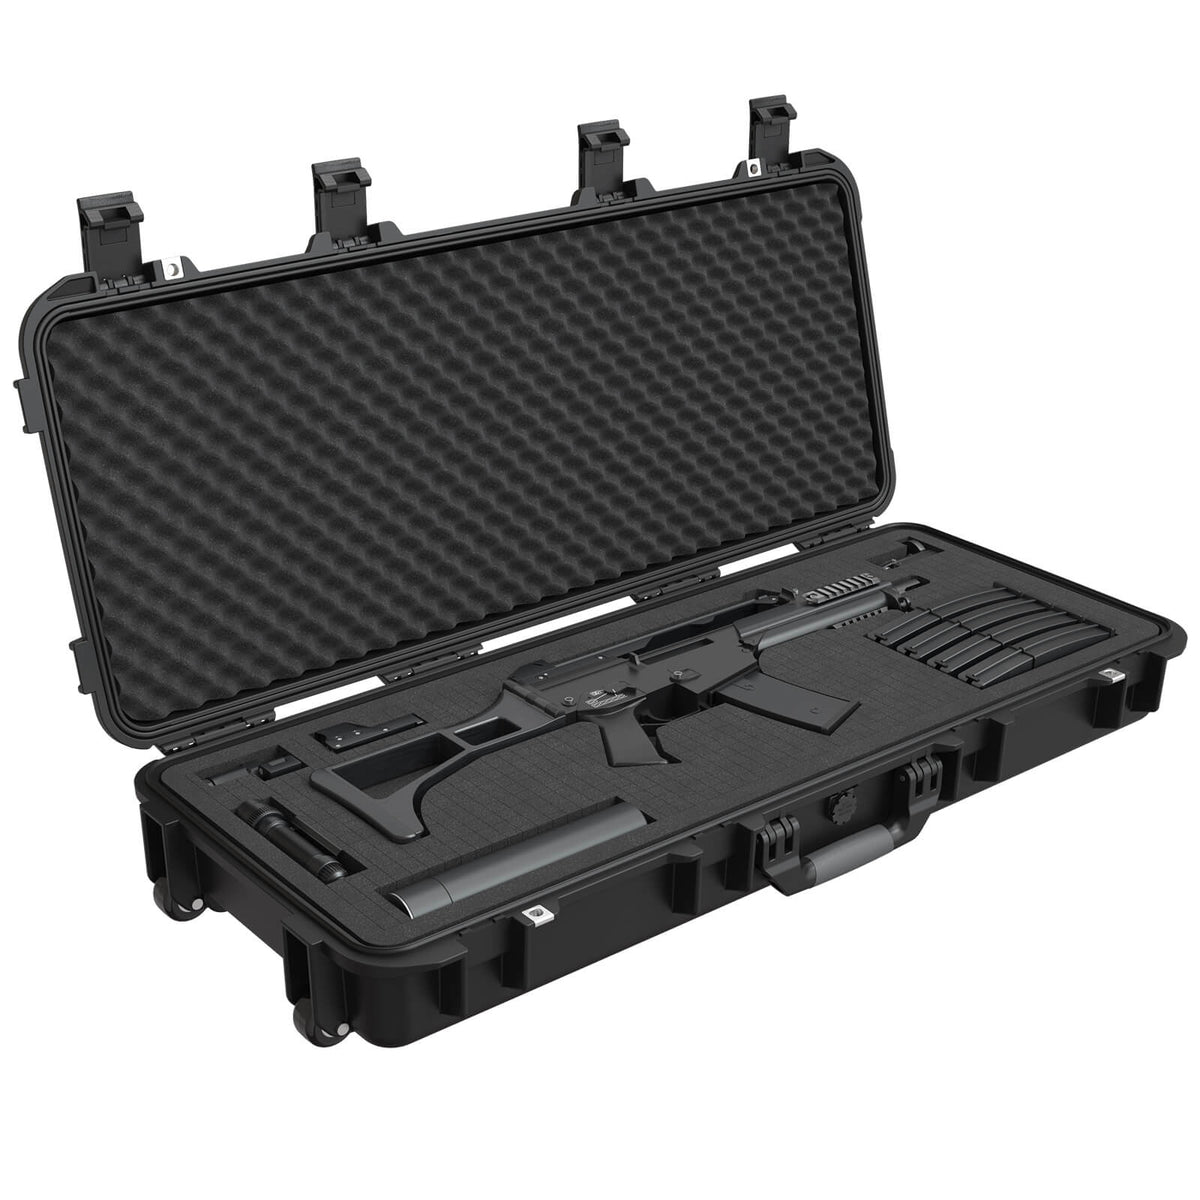 RPNB PP-91139 Weatherproof Hard Rifle Case with Customizable Foam